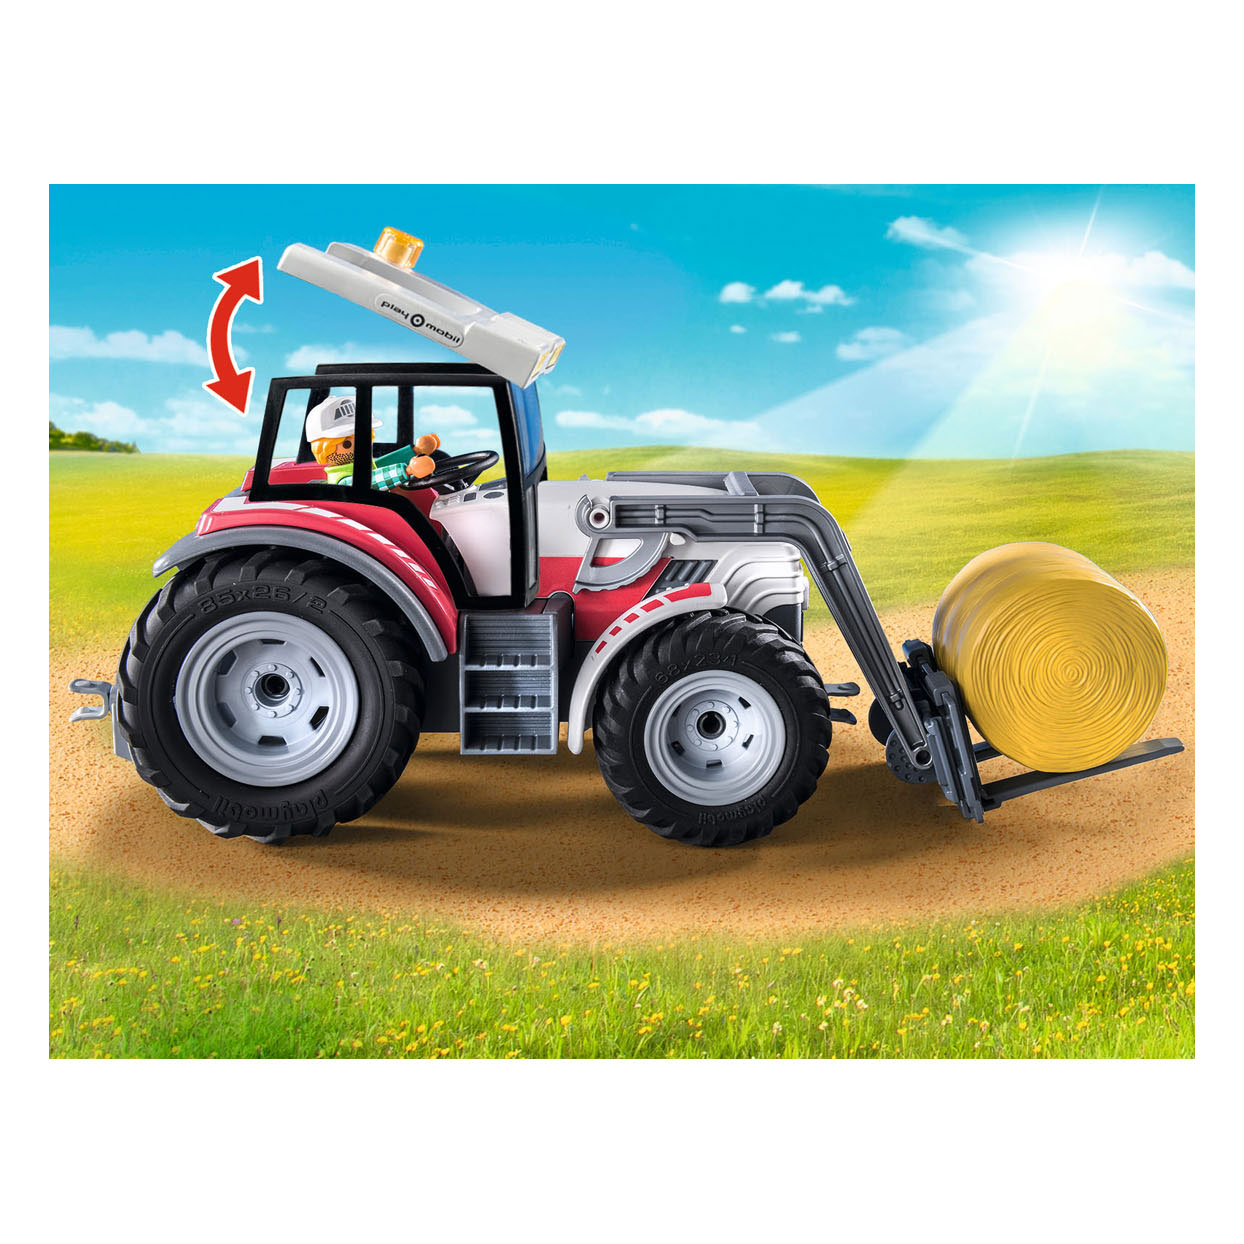 Playmobil Country Großtraktor mit Zubehör - 71305